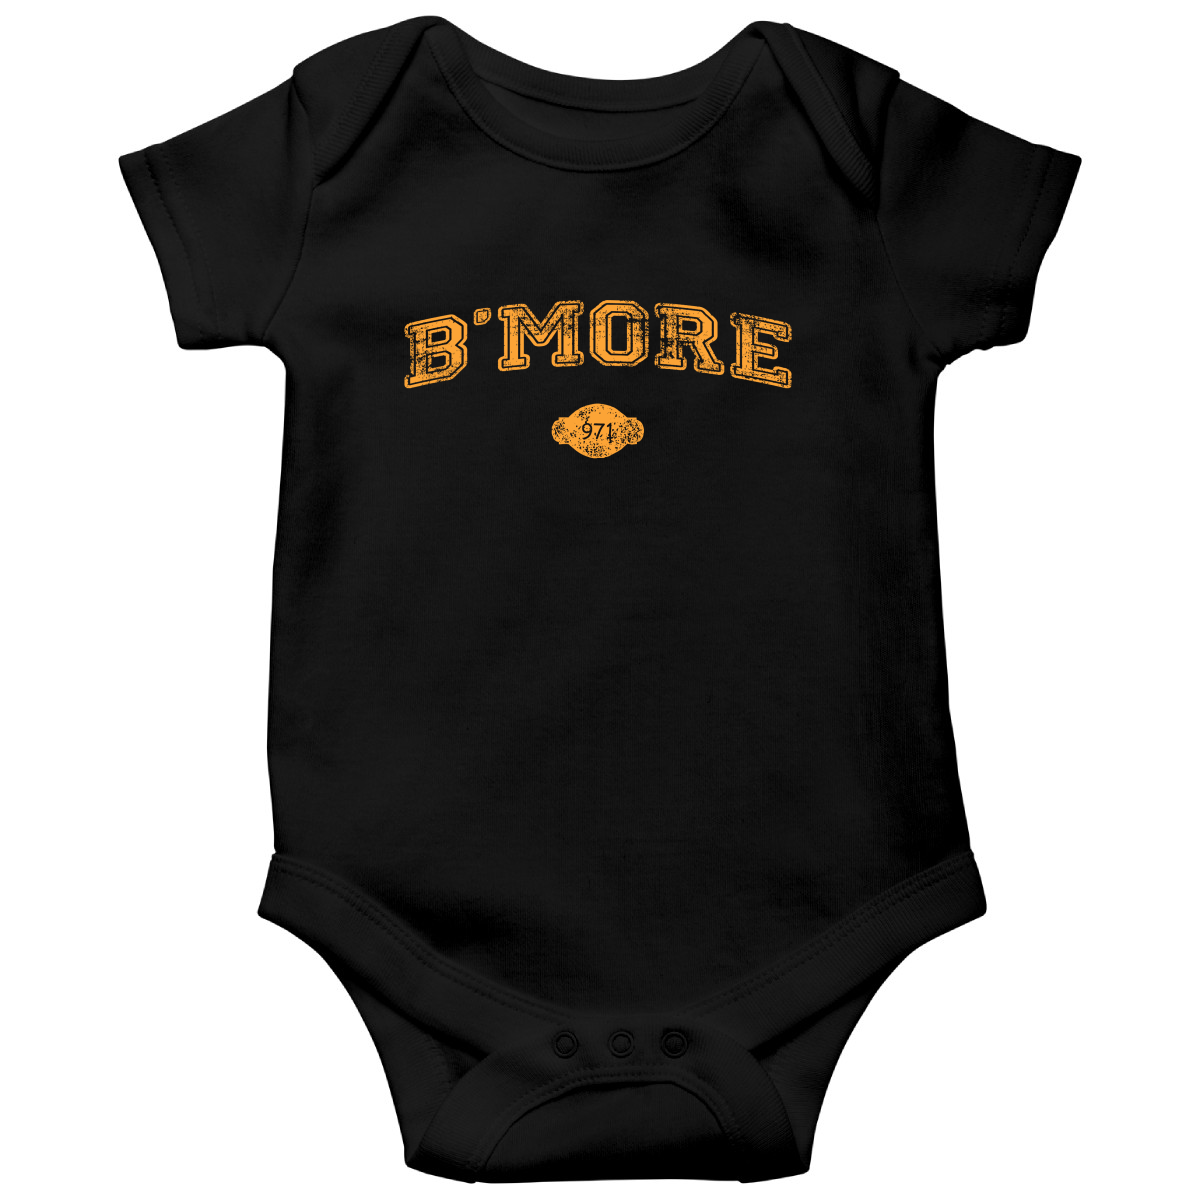 B'more 1729 Represent Baby Bodysuits | Black